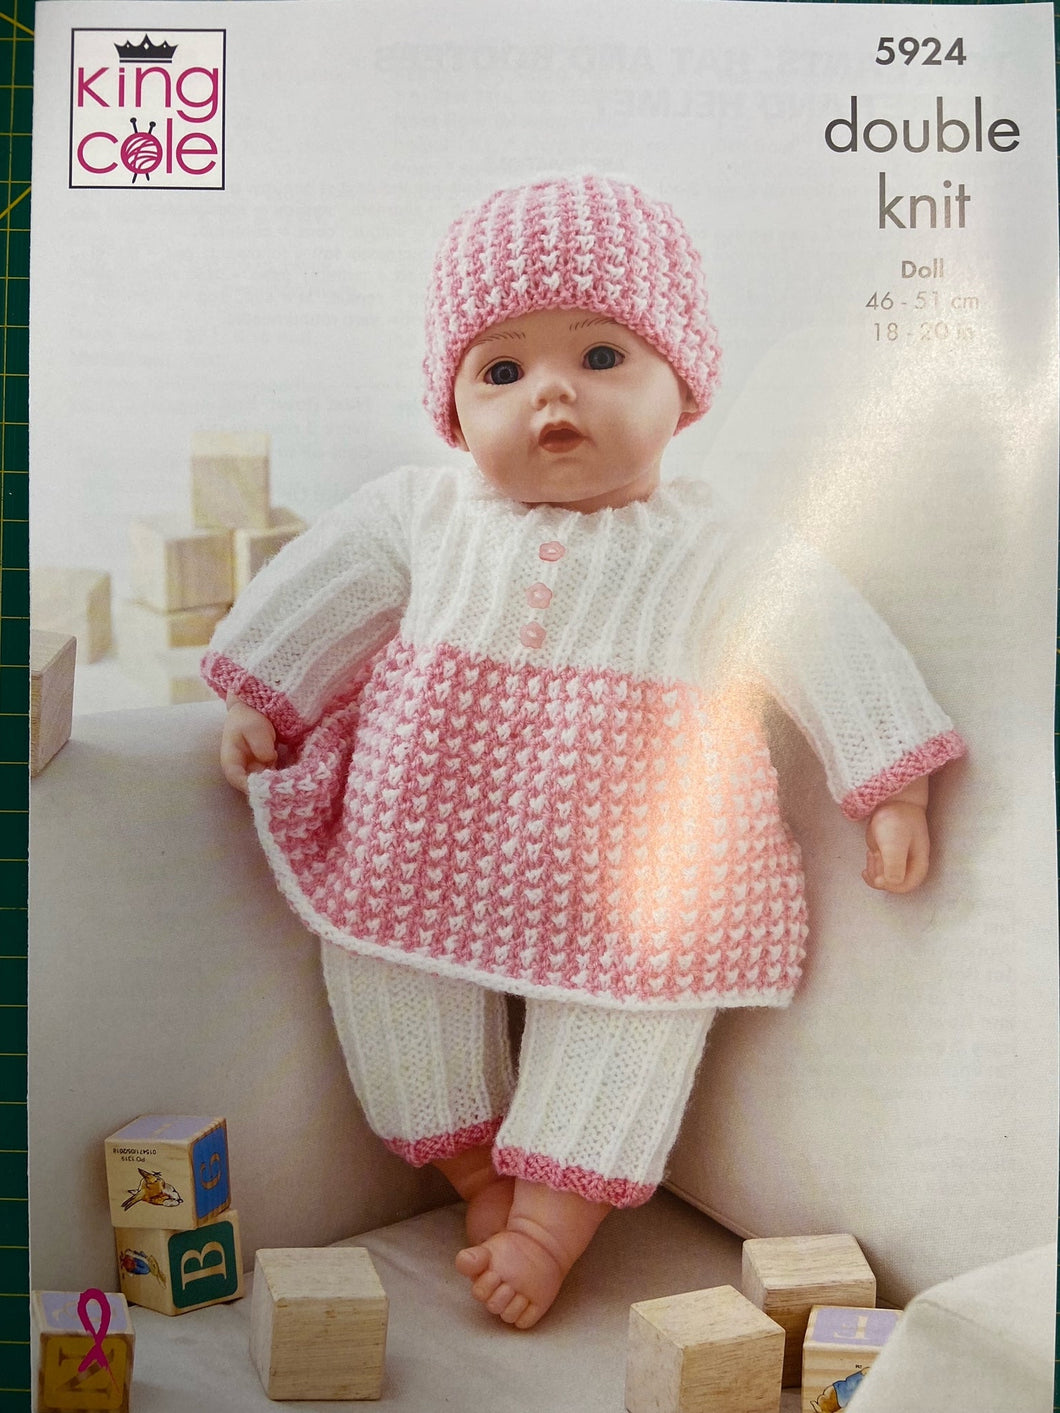 king cole dolls doll clothes double knit dk 5924 knitting knit yarn pattern fabric shack malmesbury